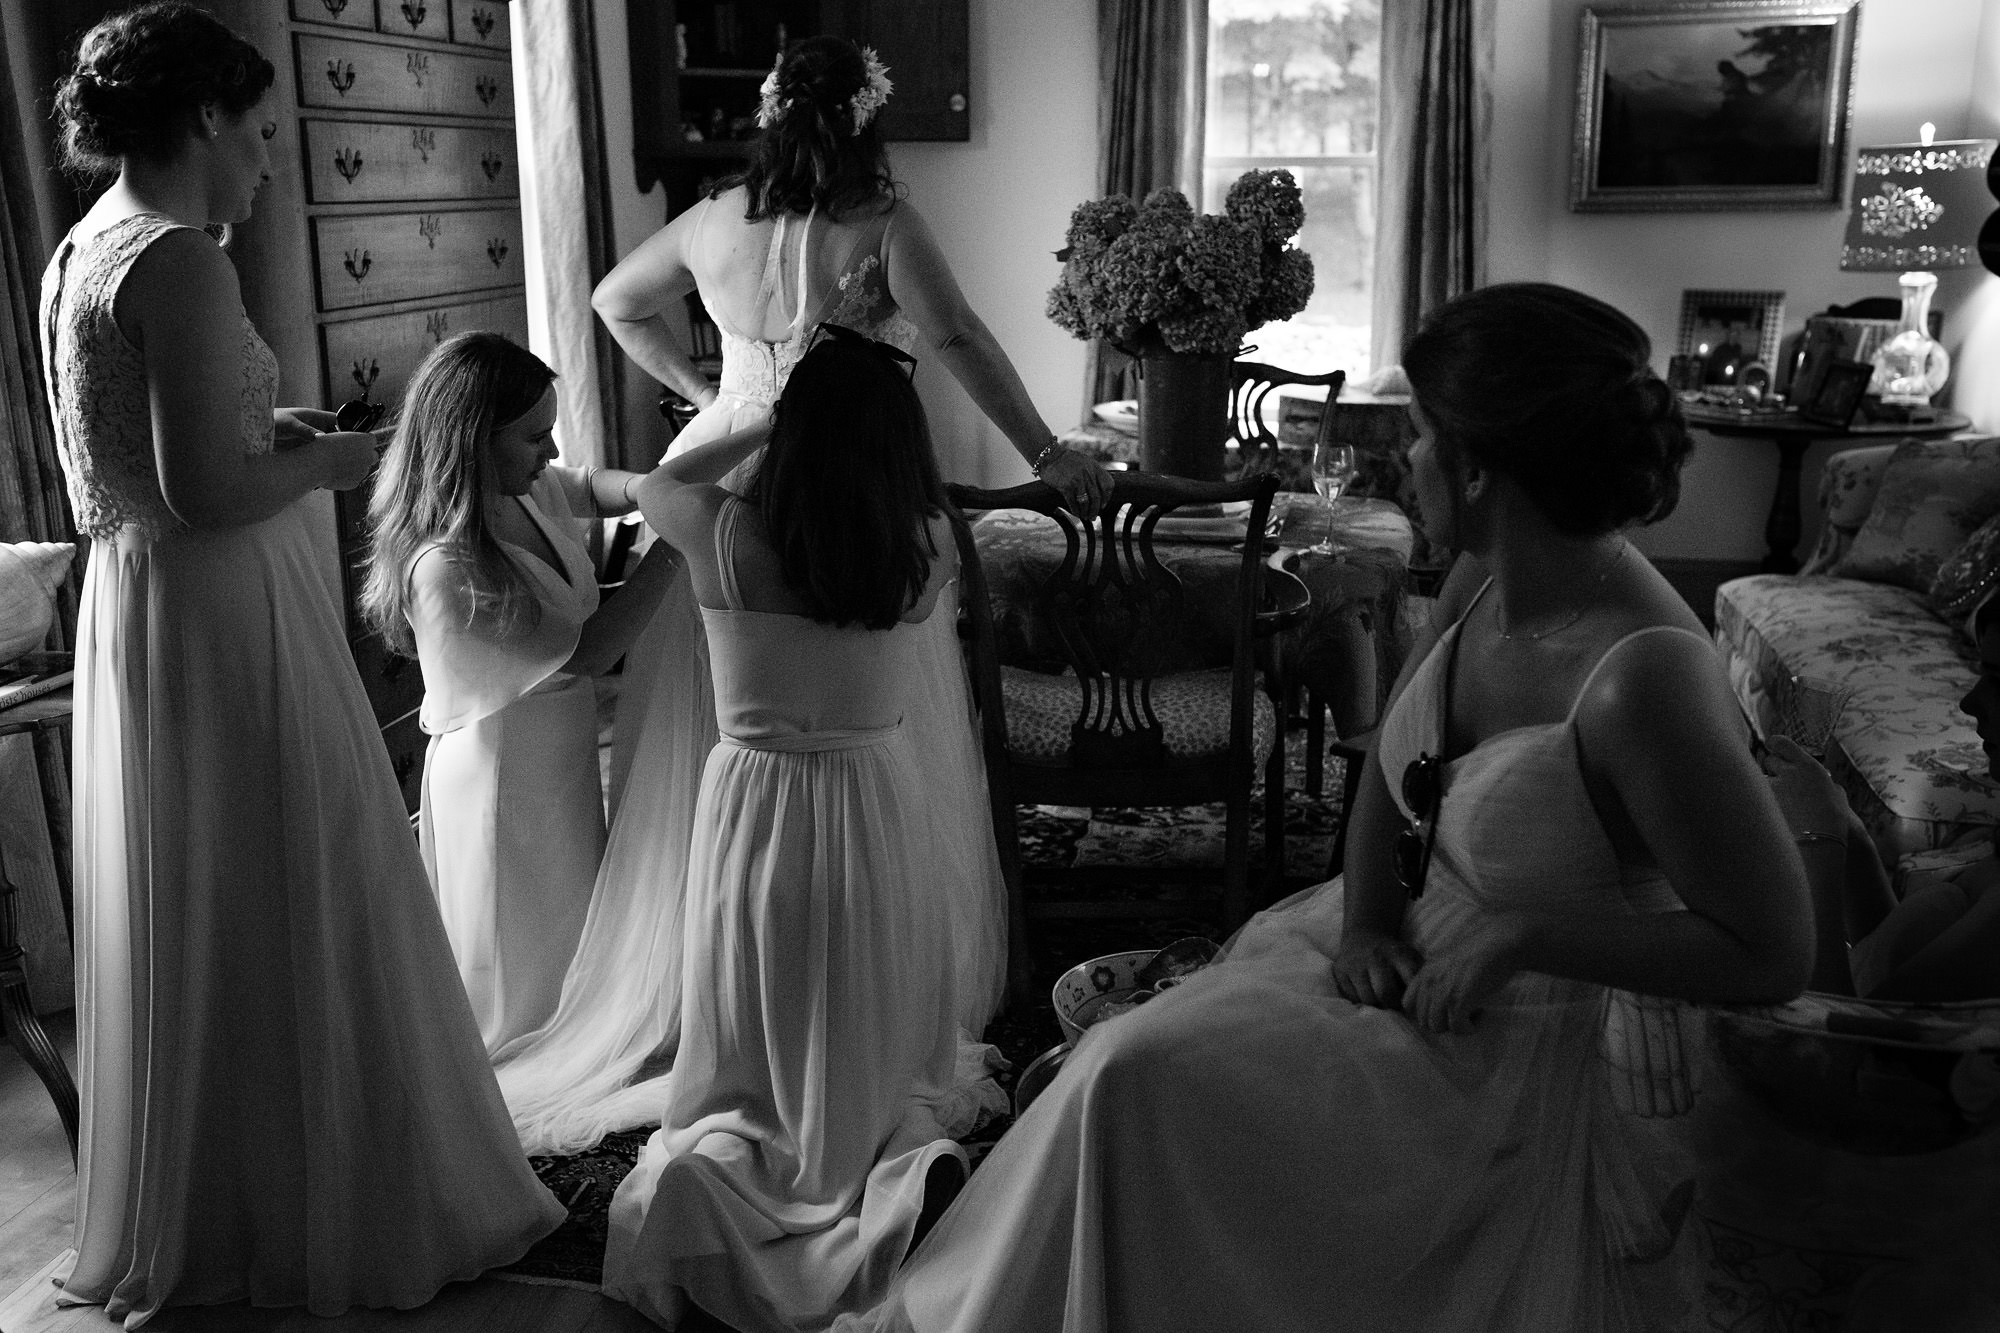 The bridesmaids help the bride bustle her wedding dress